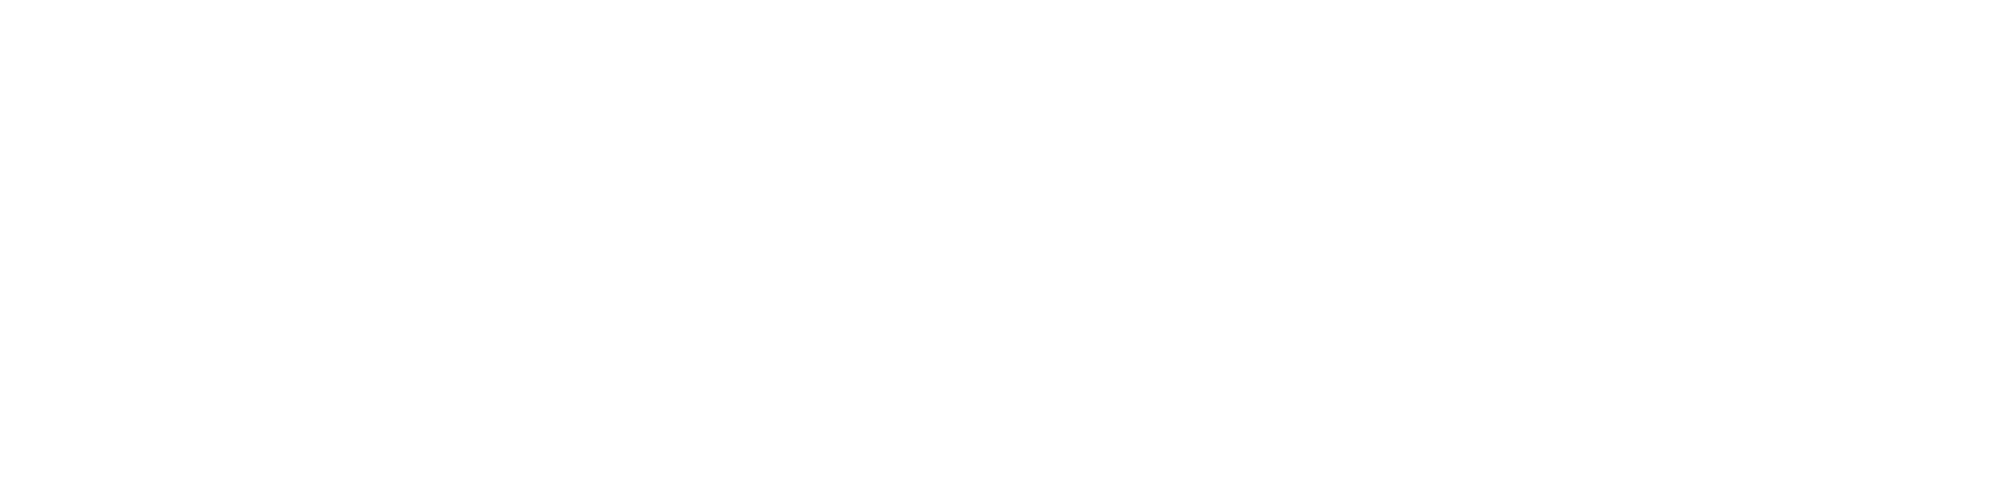 Madedesign_02-1